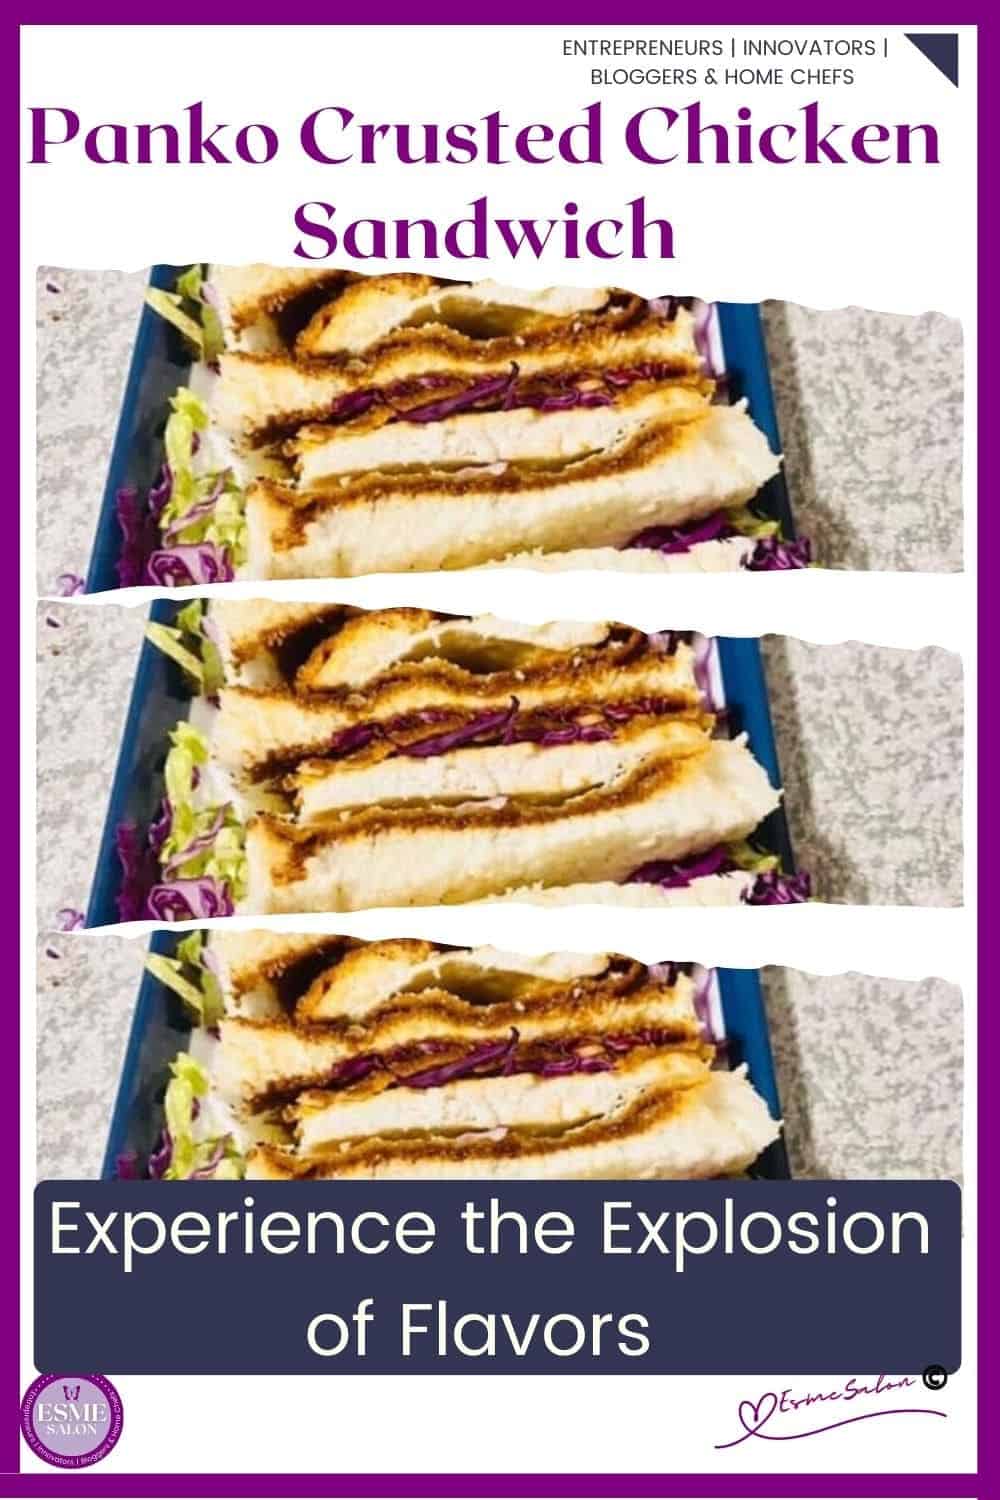 an image of Crispy Panko Crusted Chicken Sandwiches with Tonkatsu Sauce